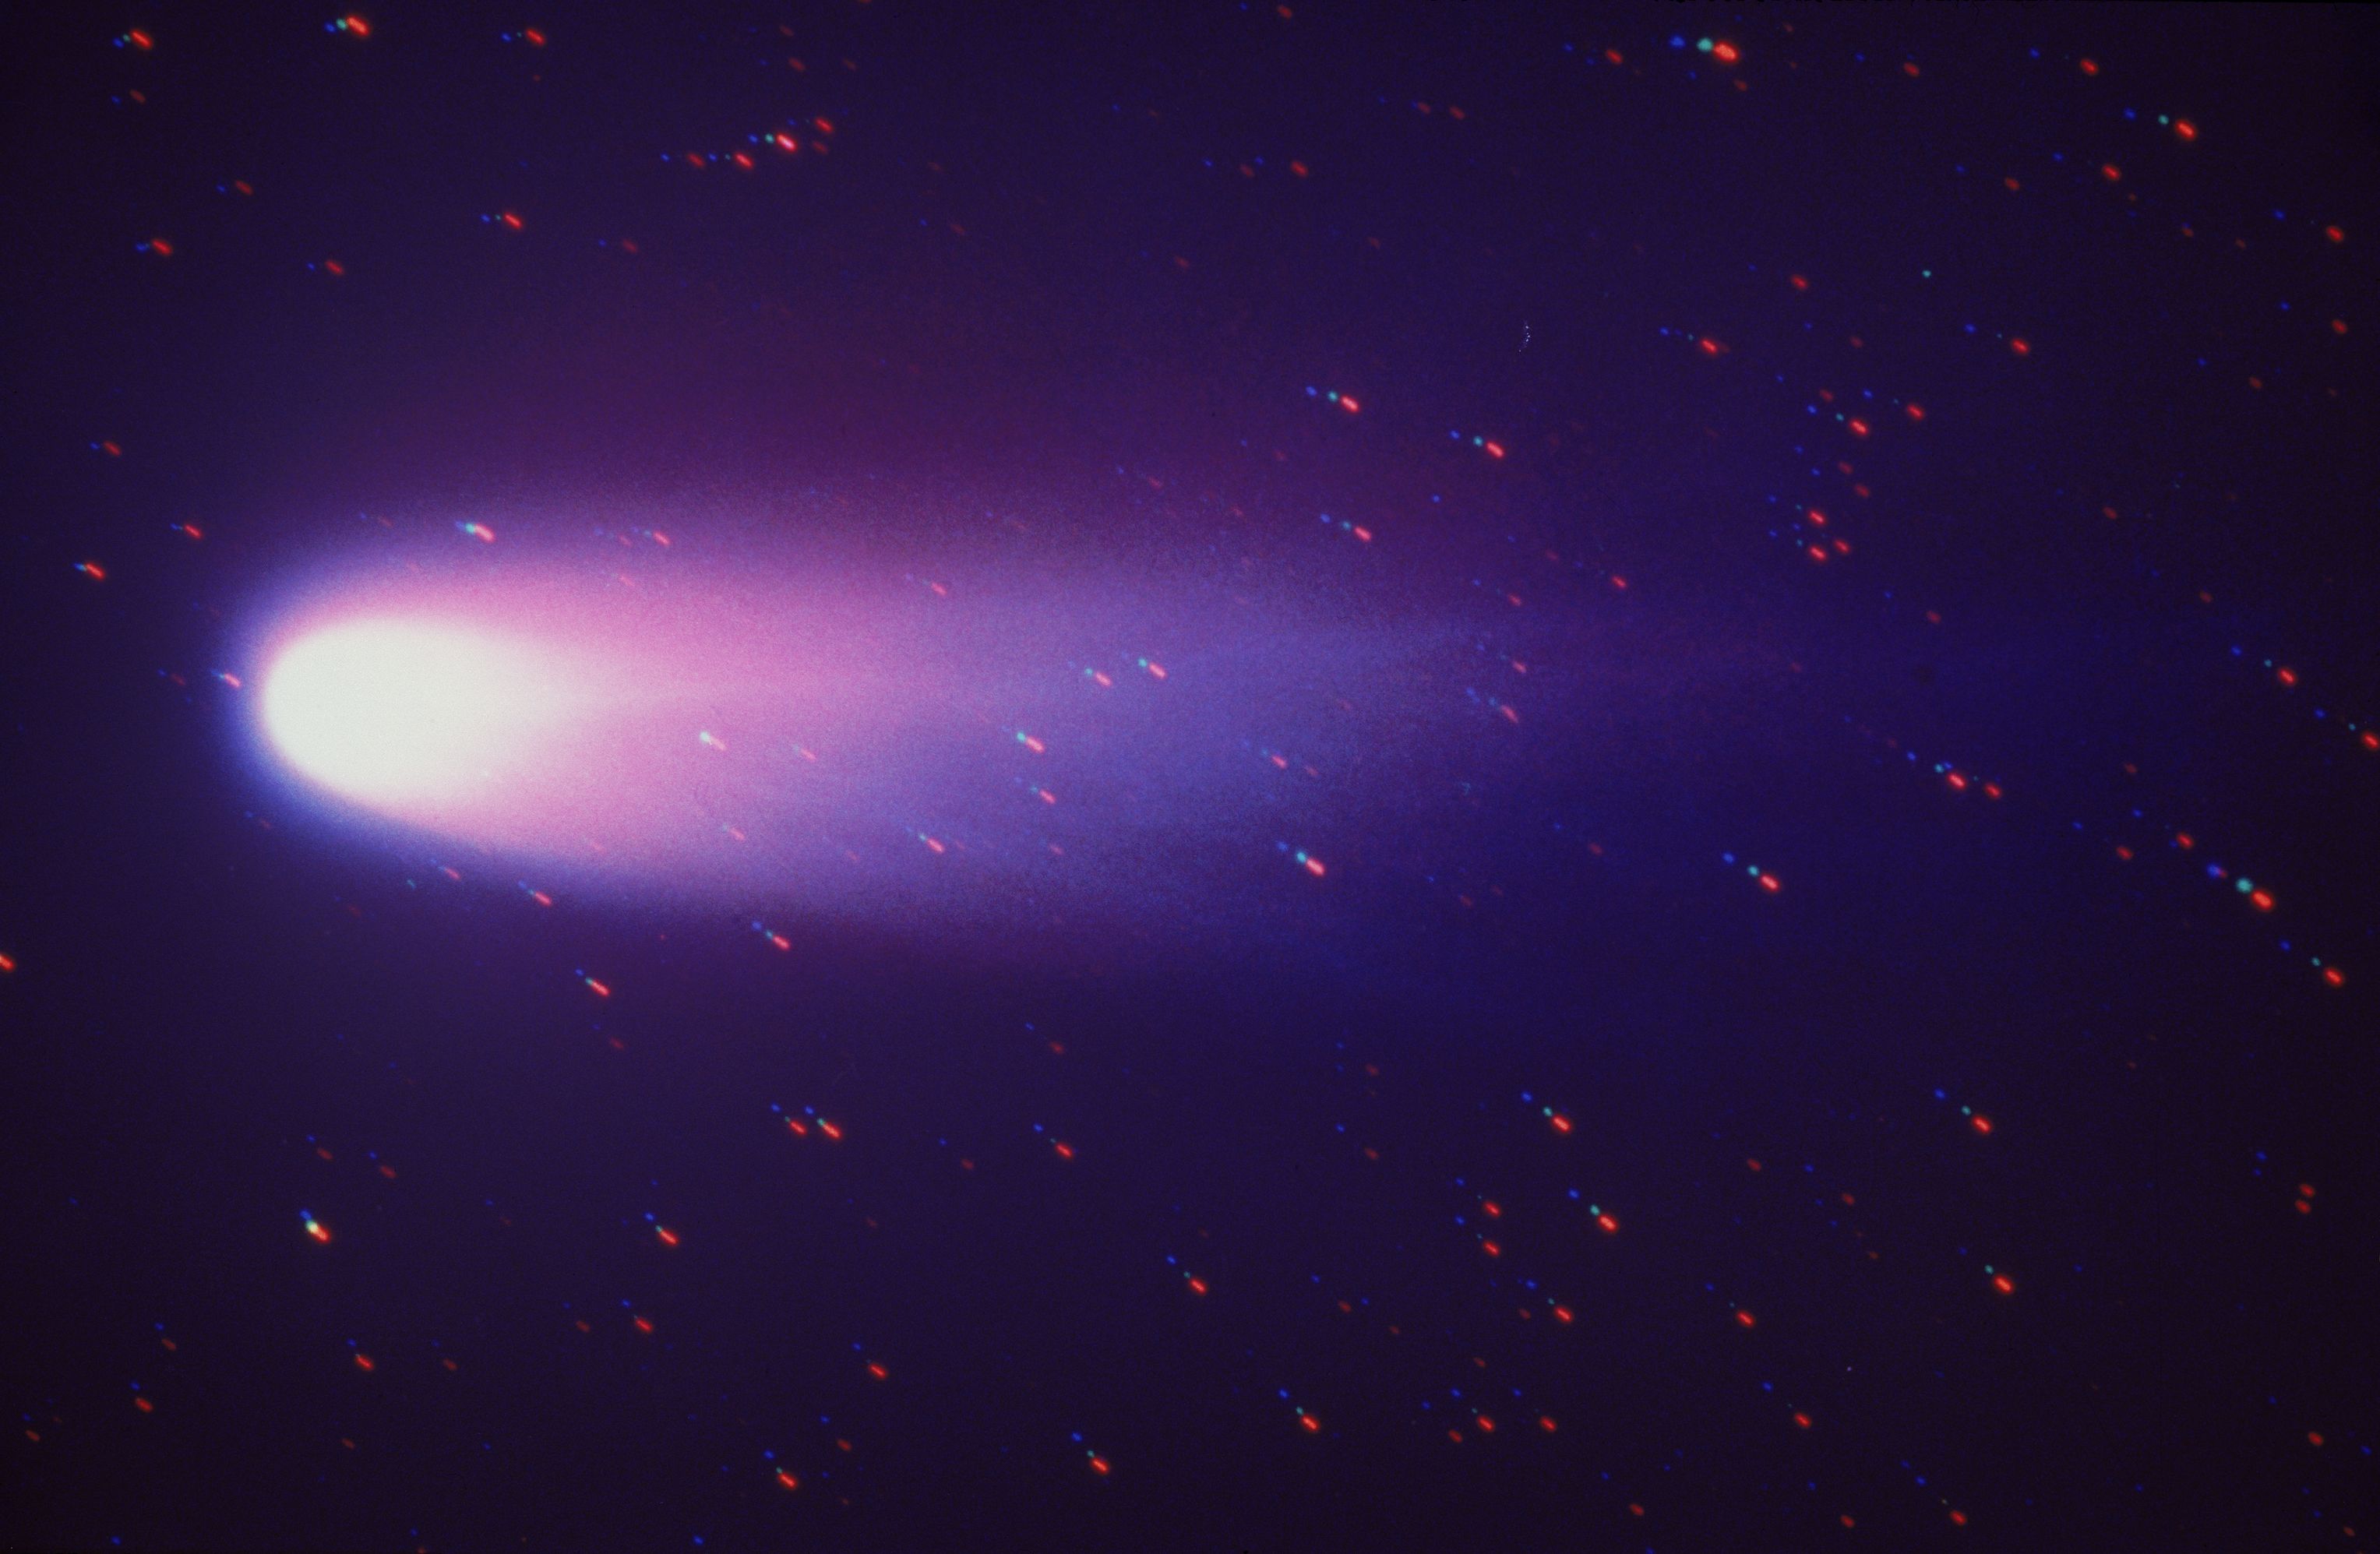 Space in Images - 2009 - 01 - Halley's Comet